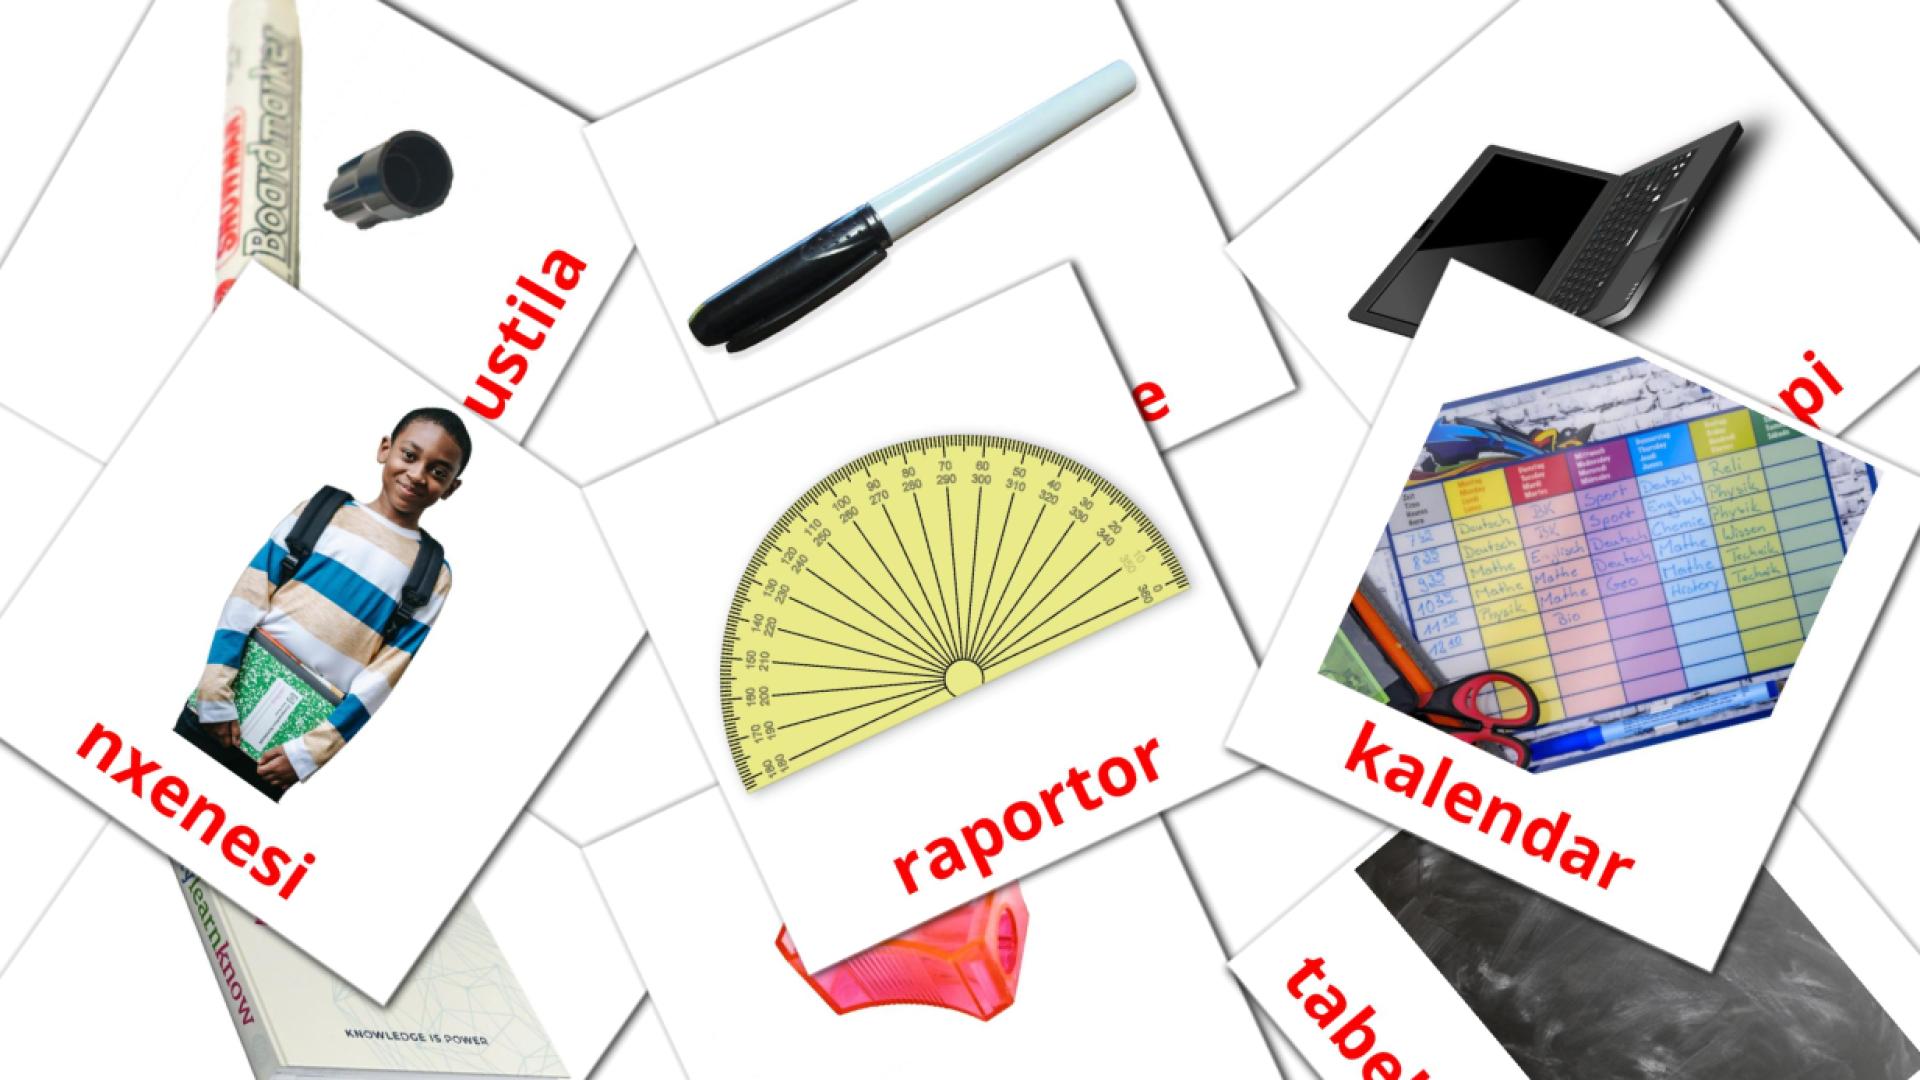 Classroom objects - albanian vocabulary cards